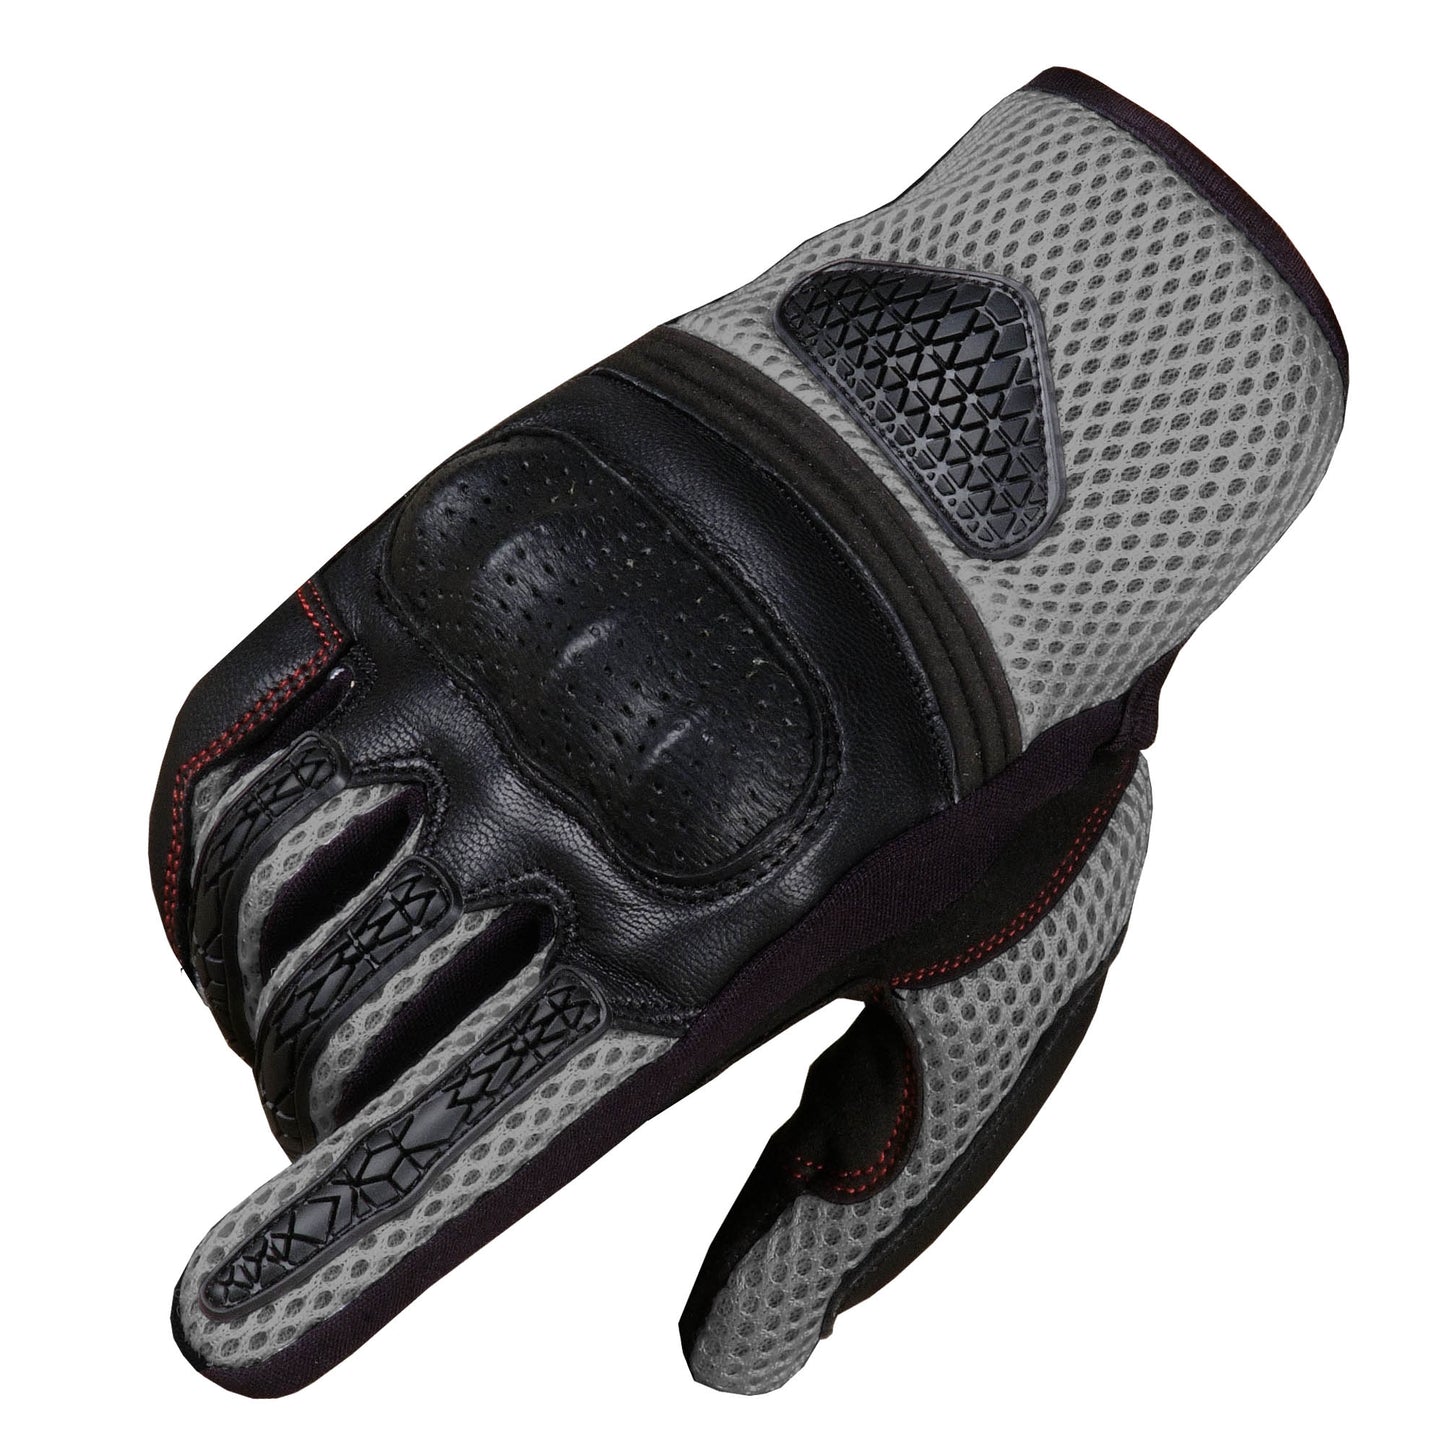 Jackets 4 Bikes Men Motorcycle Gloves Premium Leather Touchscreen Cruising Street Riding Grey